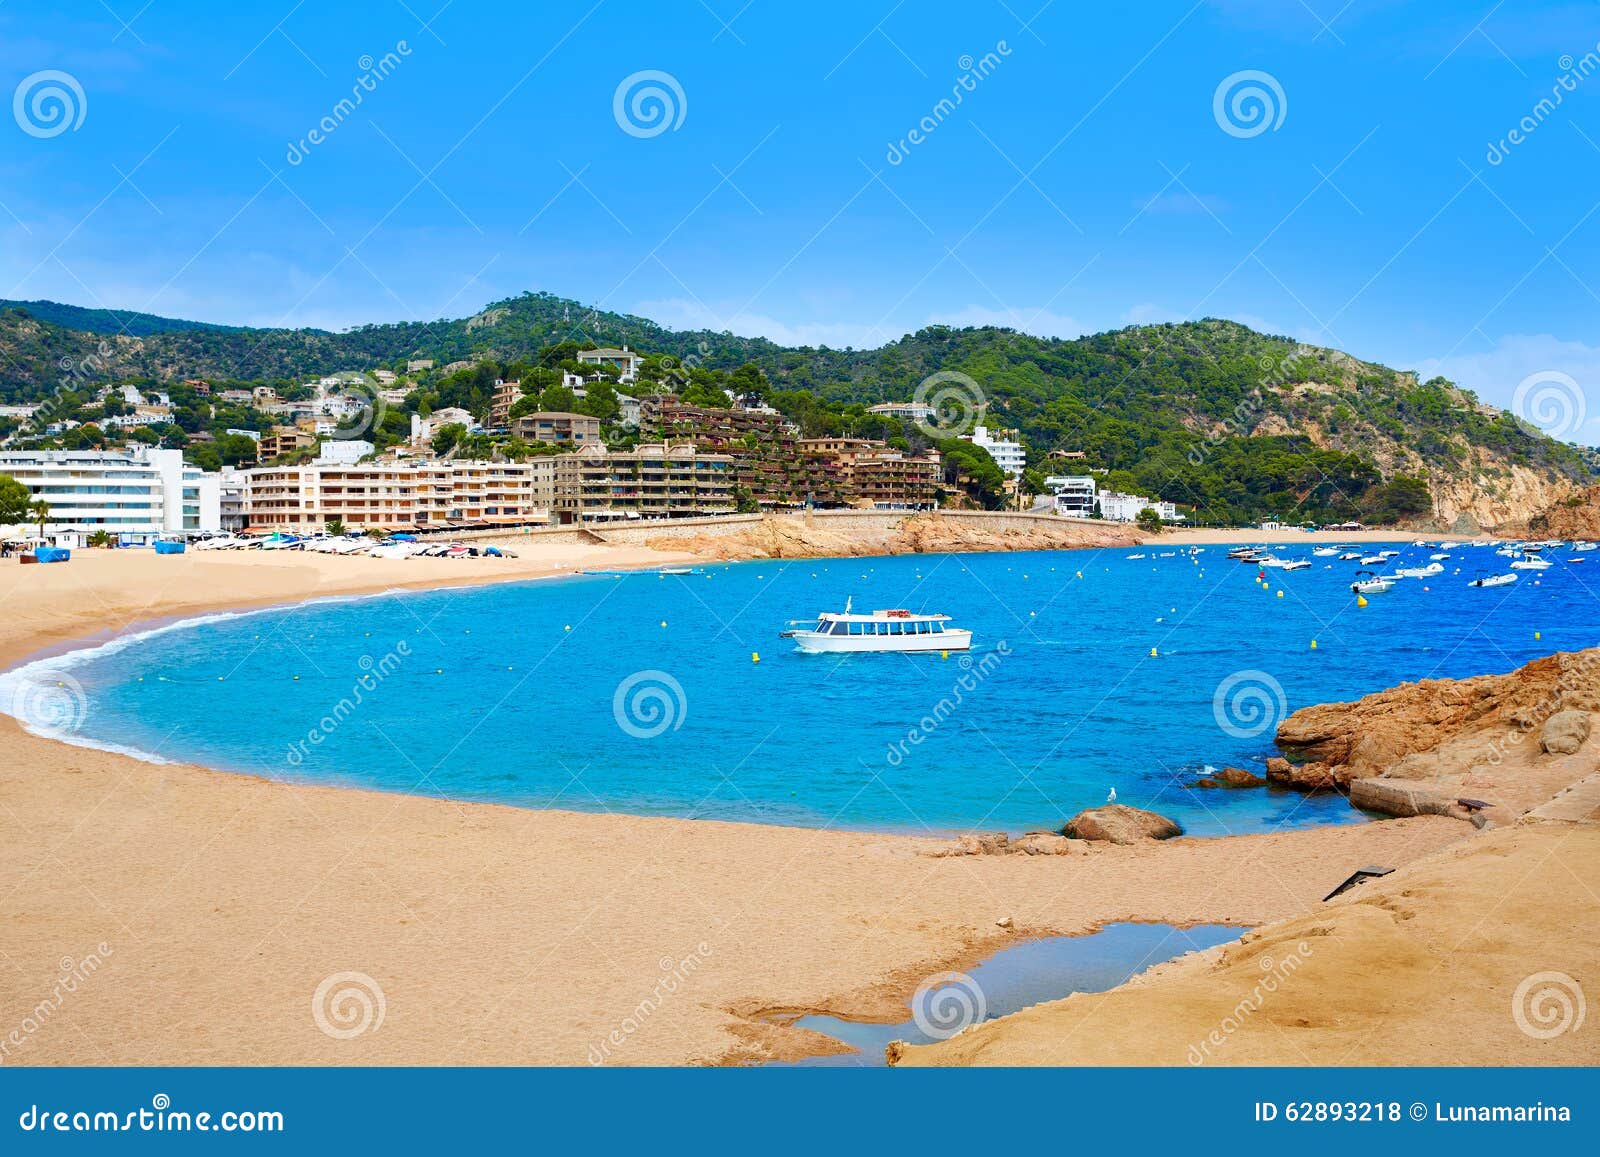 tossa de mar beach in costa brava of catalonia